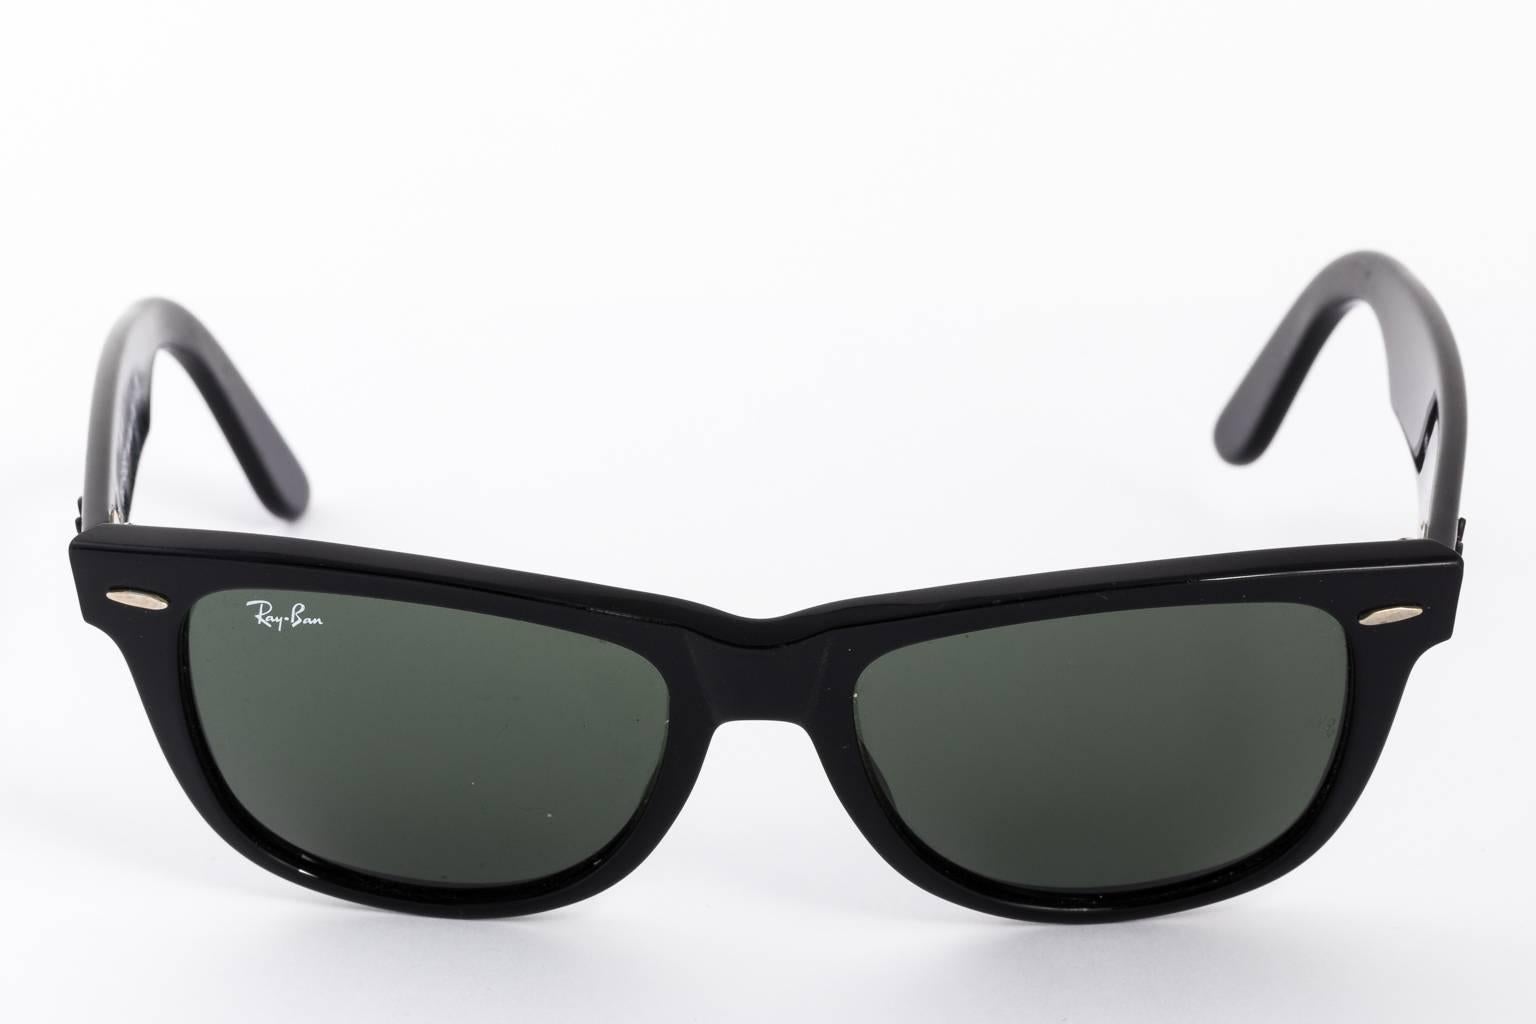  Black Ray-Ban sunglasses 1